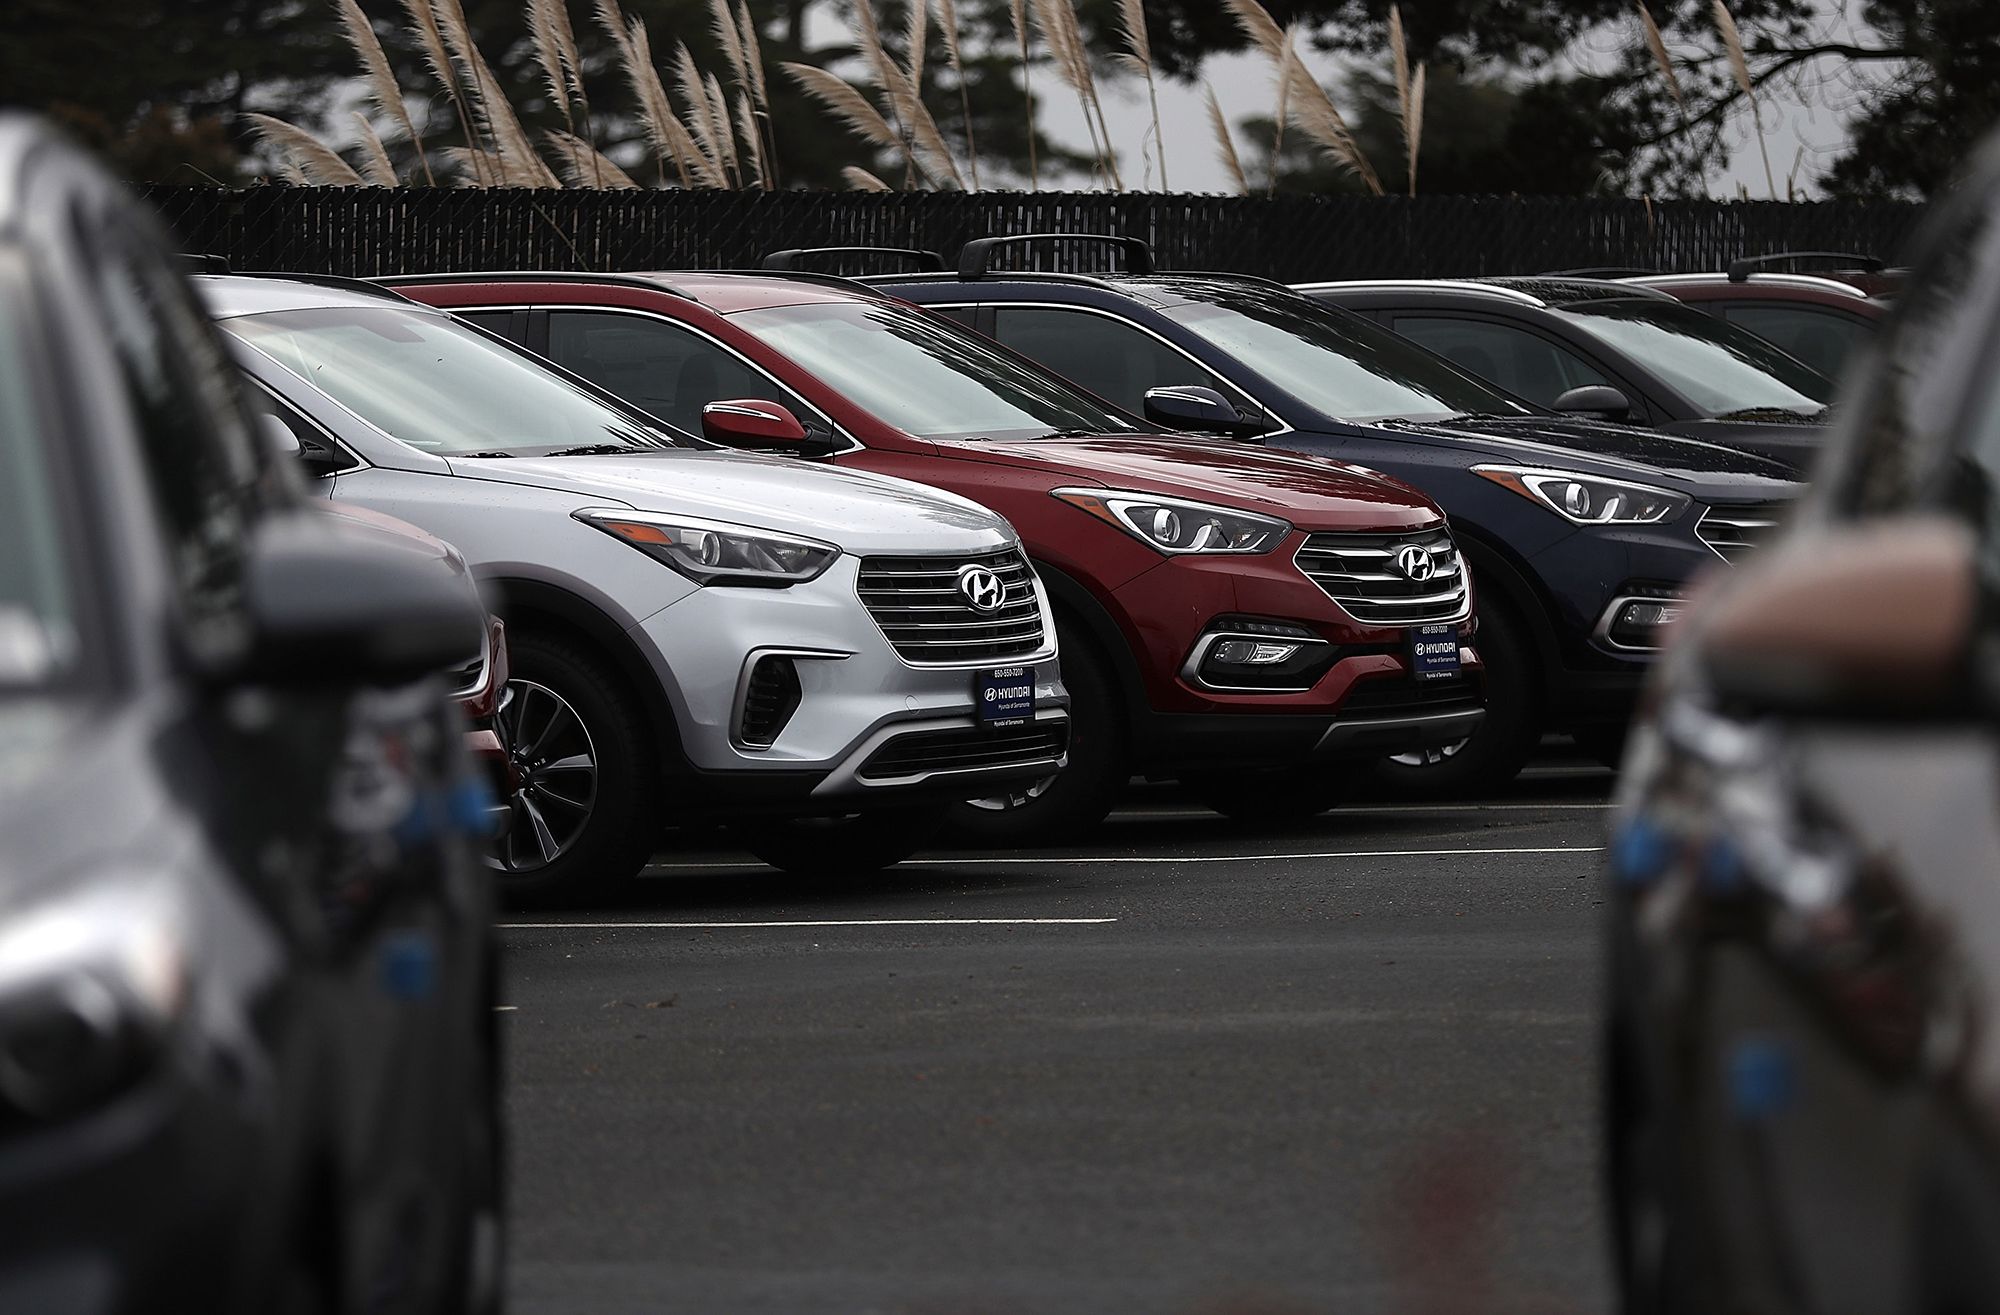 Drive a Newer Hyundai or Kia? A Steering Wheel Lock Could Keep It